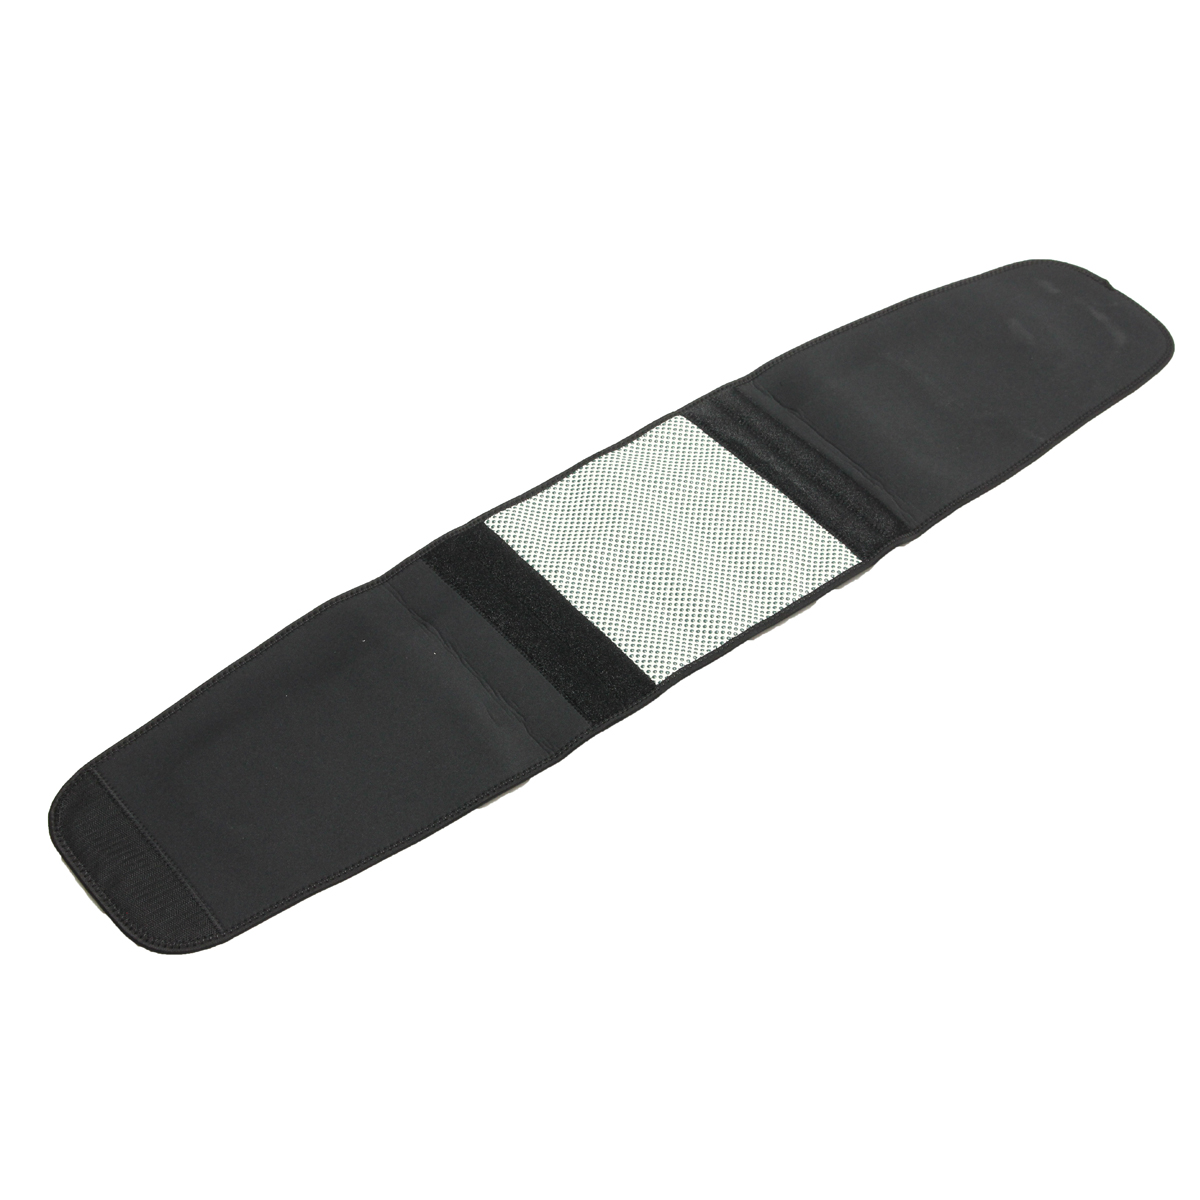 9420cm-Adjustable-Self-Heating--Elastic-Back-Lumbar-Support-Belt-Pain-Relief-Brace-Warmer-1116814